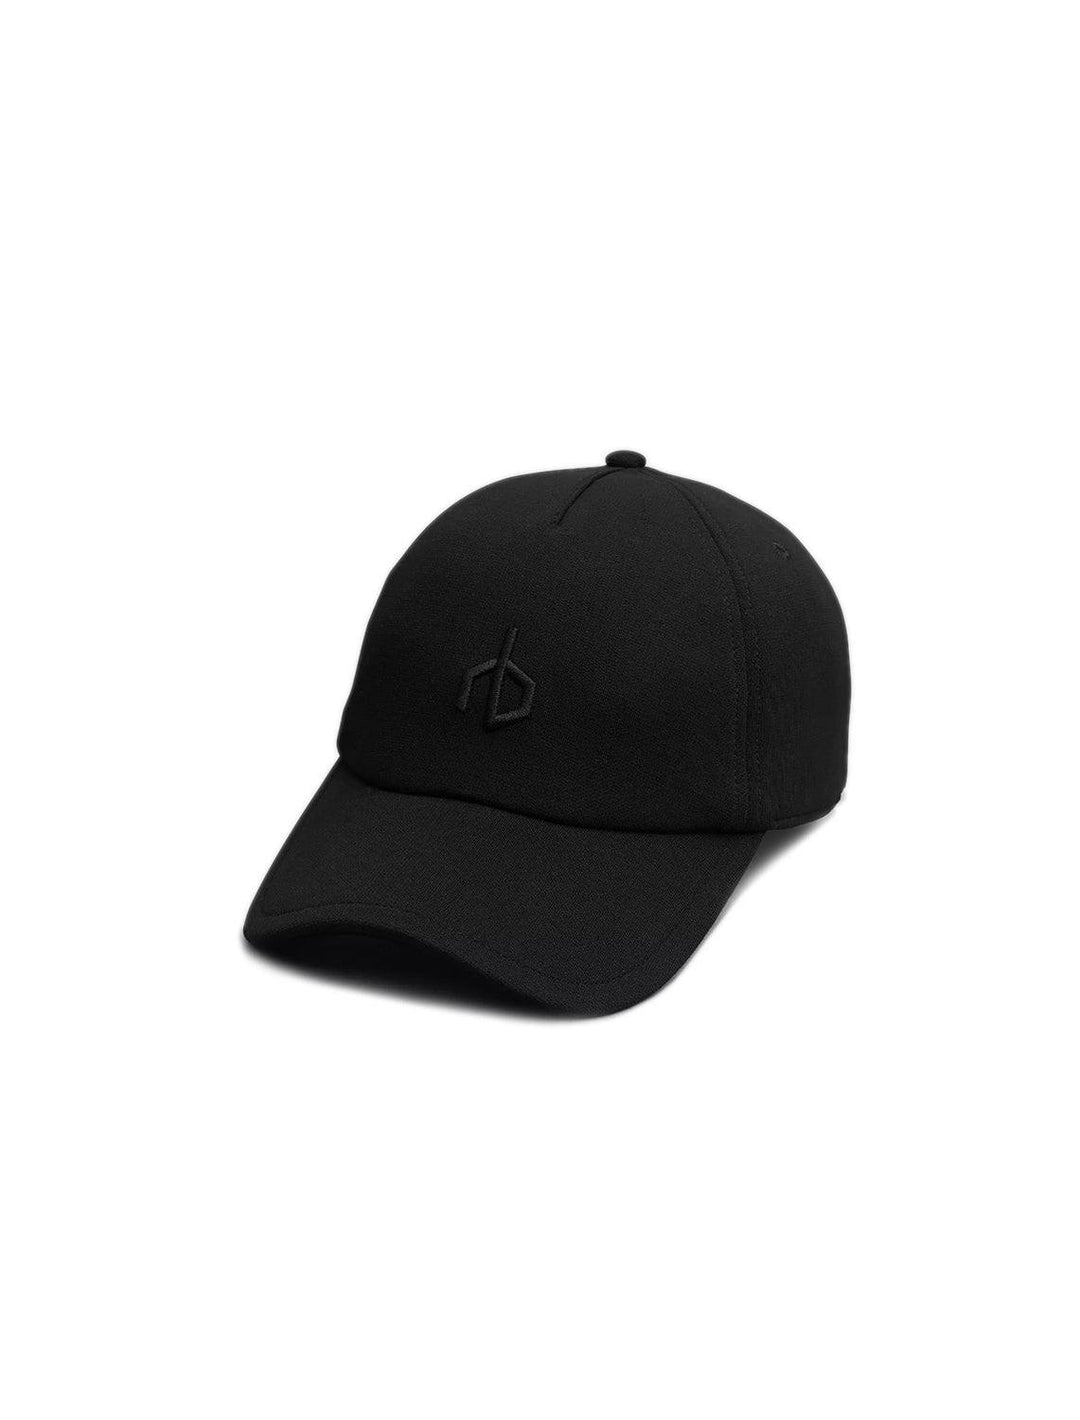 Rag & Bone's aron baseball cap in black.